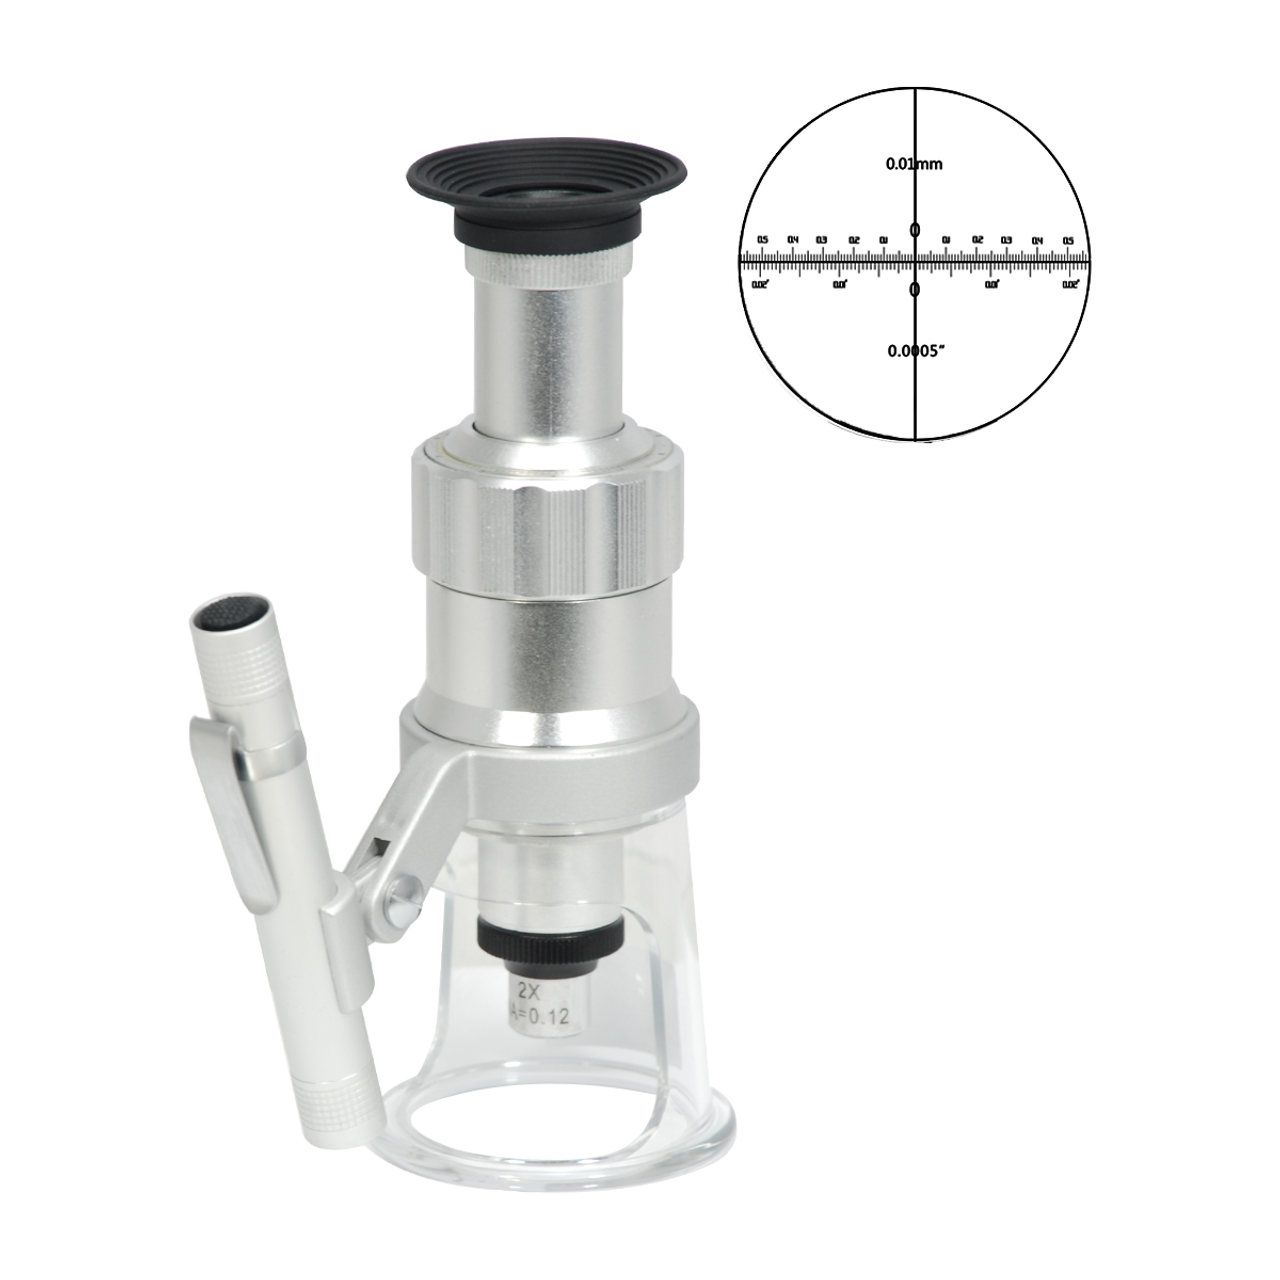 50x Pocket Pen Style Handheld Microscope Focus Focus Ajustable